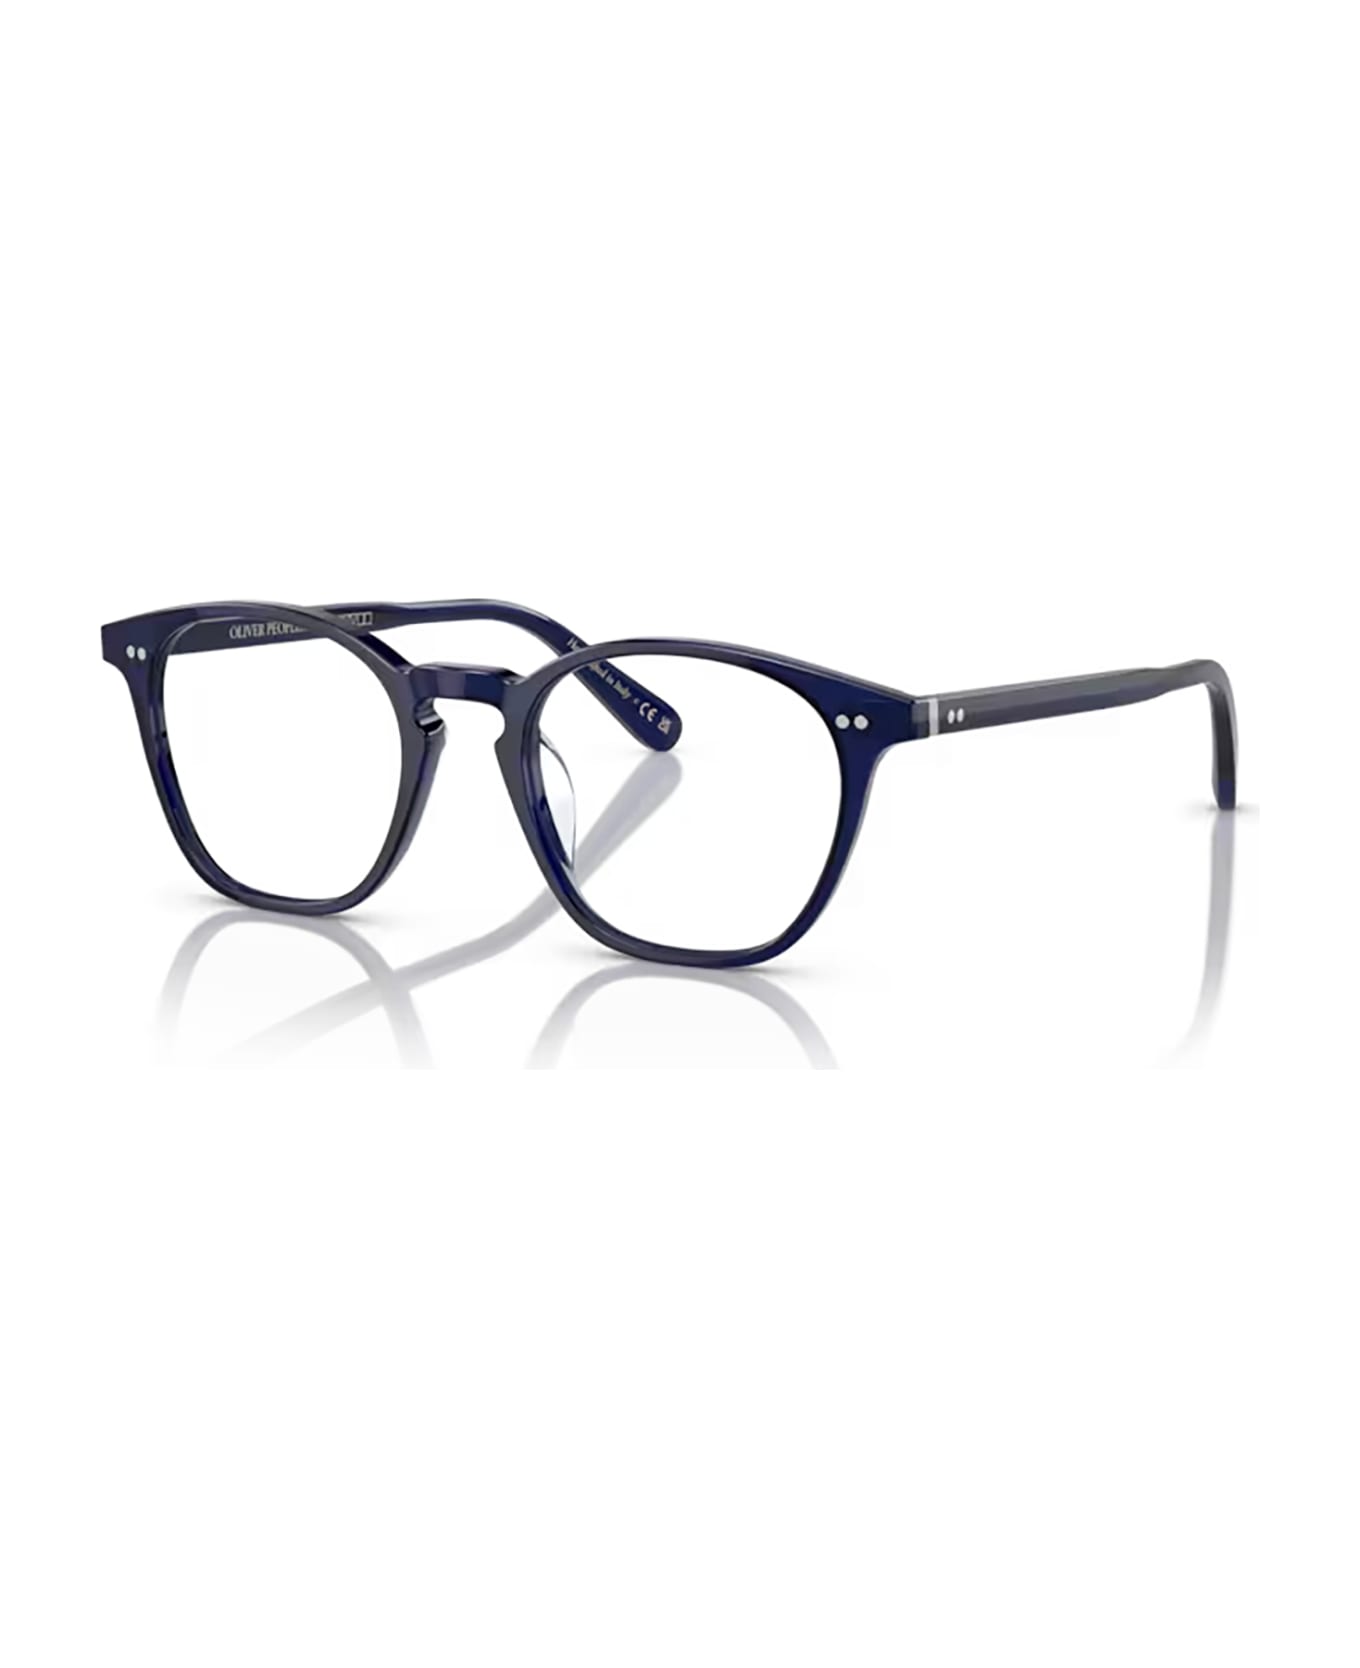 Oliver Peoples Ov5533u Denim Glasses - Denim